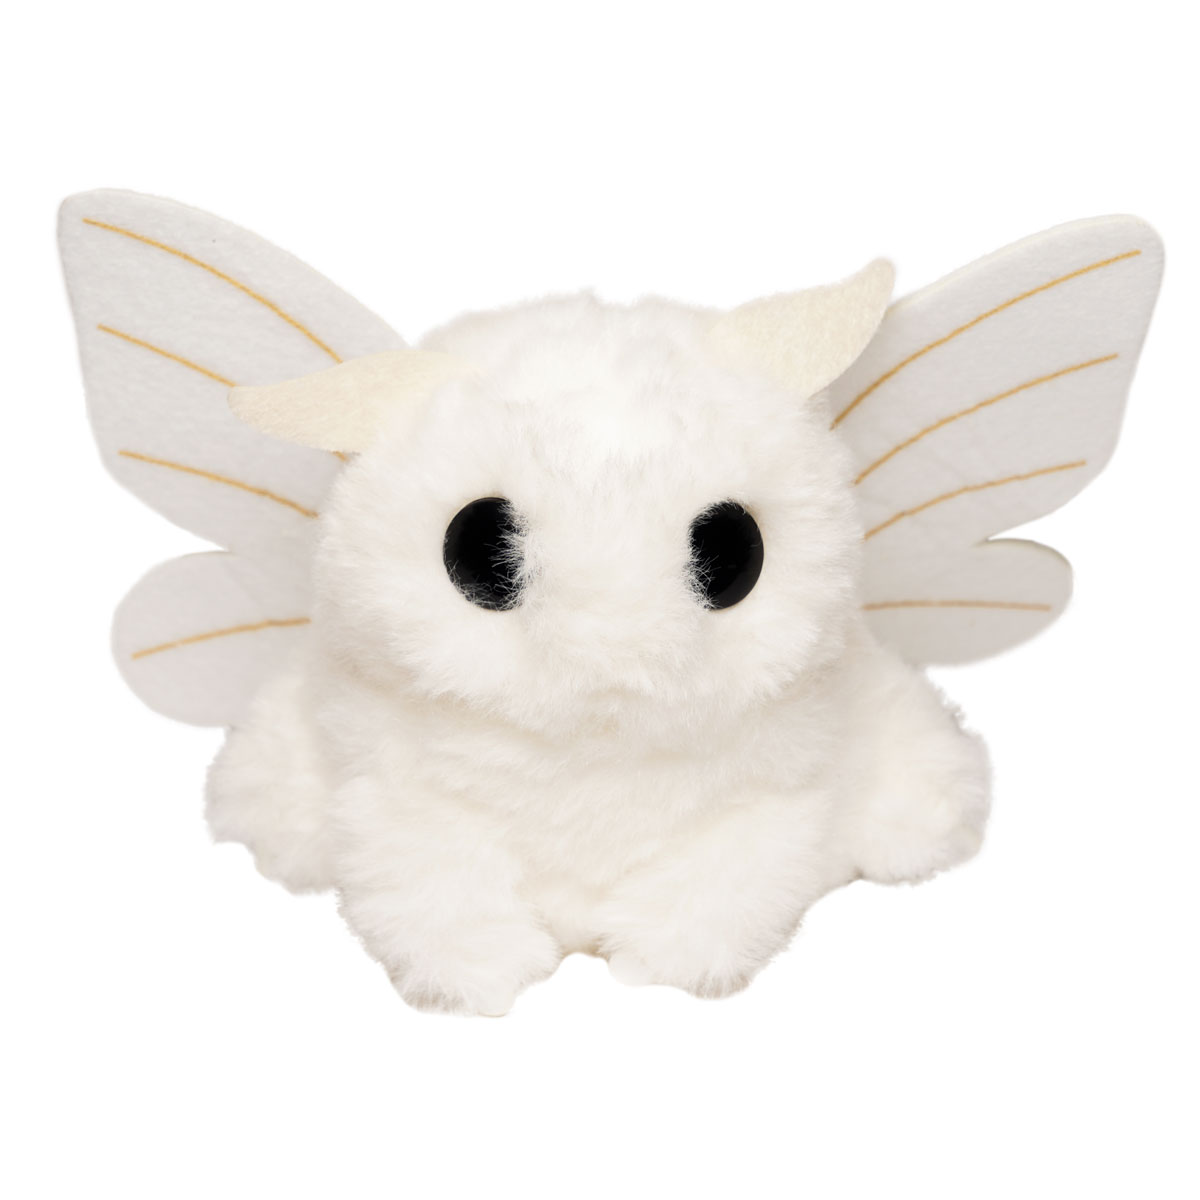 Poodle Moth Plush Toy Kawaii Stuffed Animal White Keychain Size 4